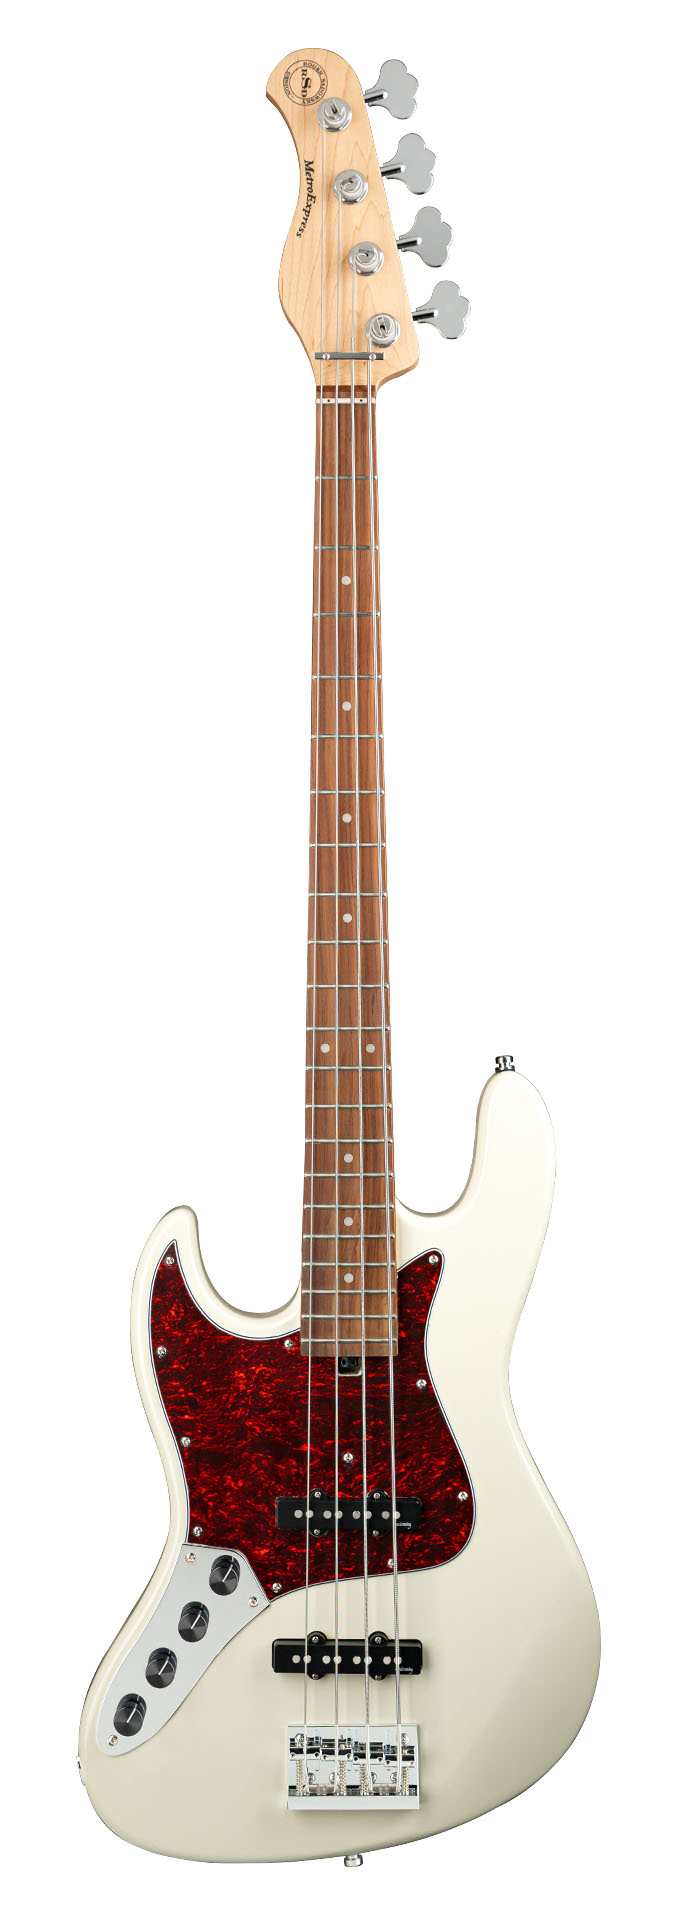 Sadowsky MetroExpress 21-Fret Vintage J/J Bass, Morado Fingerboard, Lefthand, 4-String - Solid Olympic White High Polish